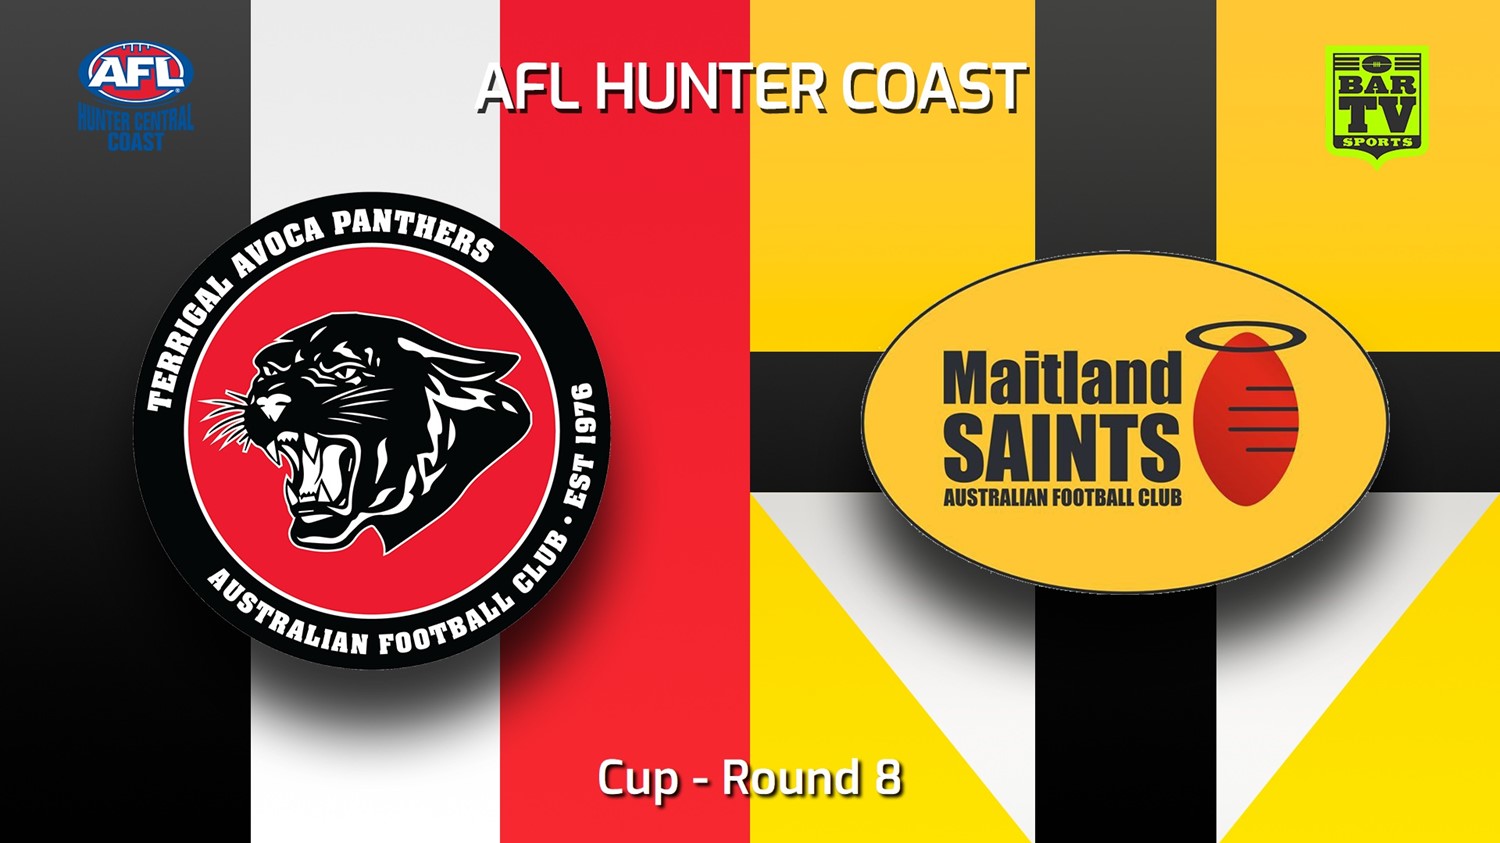 230527-AFL Hunter Central Coast Round 8 - Cup - Terrigal Avoca Panthers v Maitland Saints Minigame Slate Image